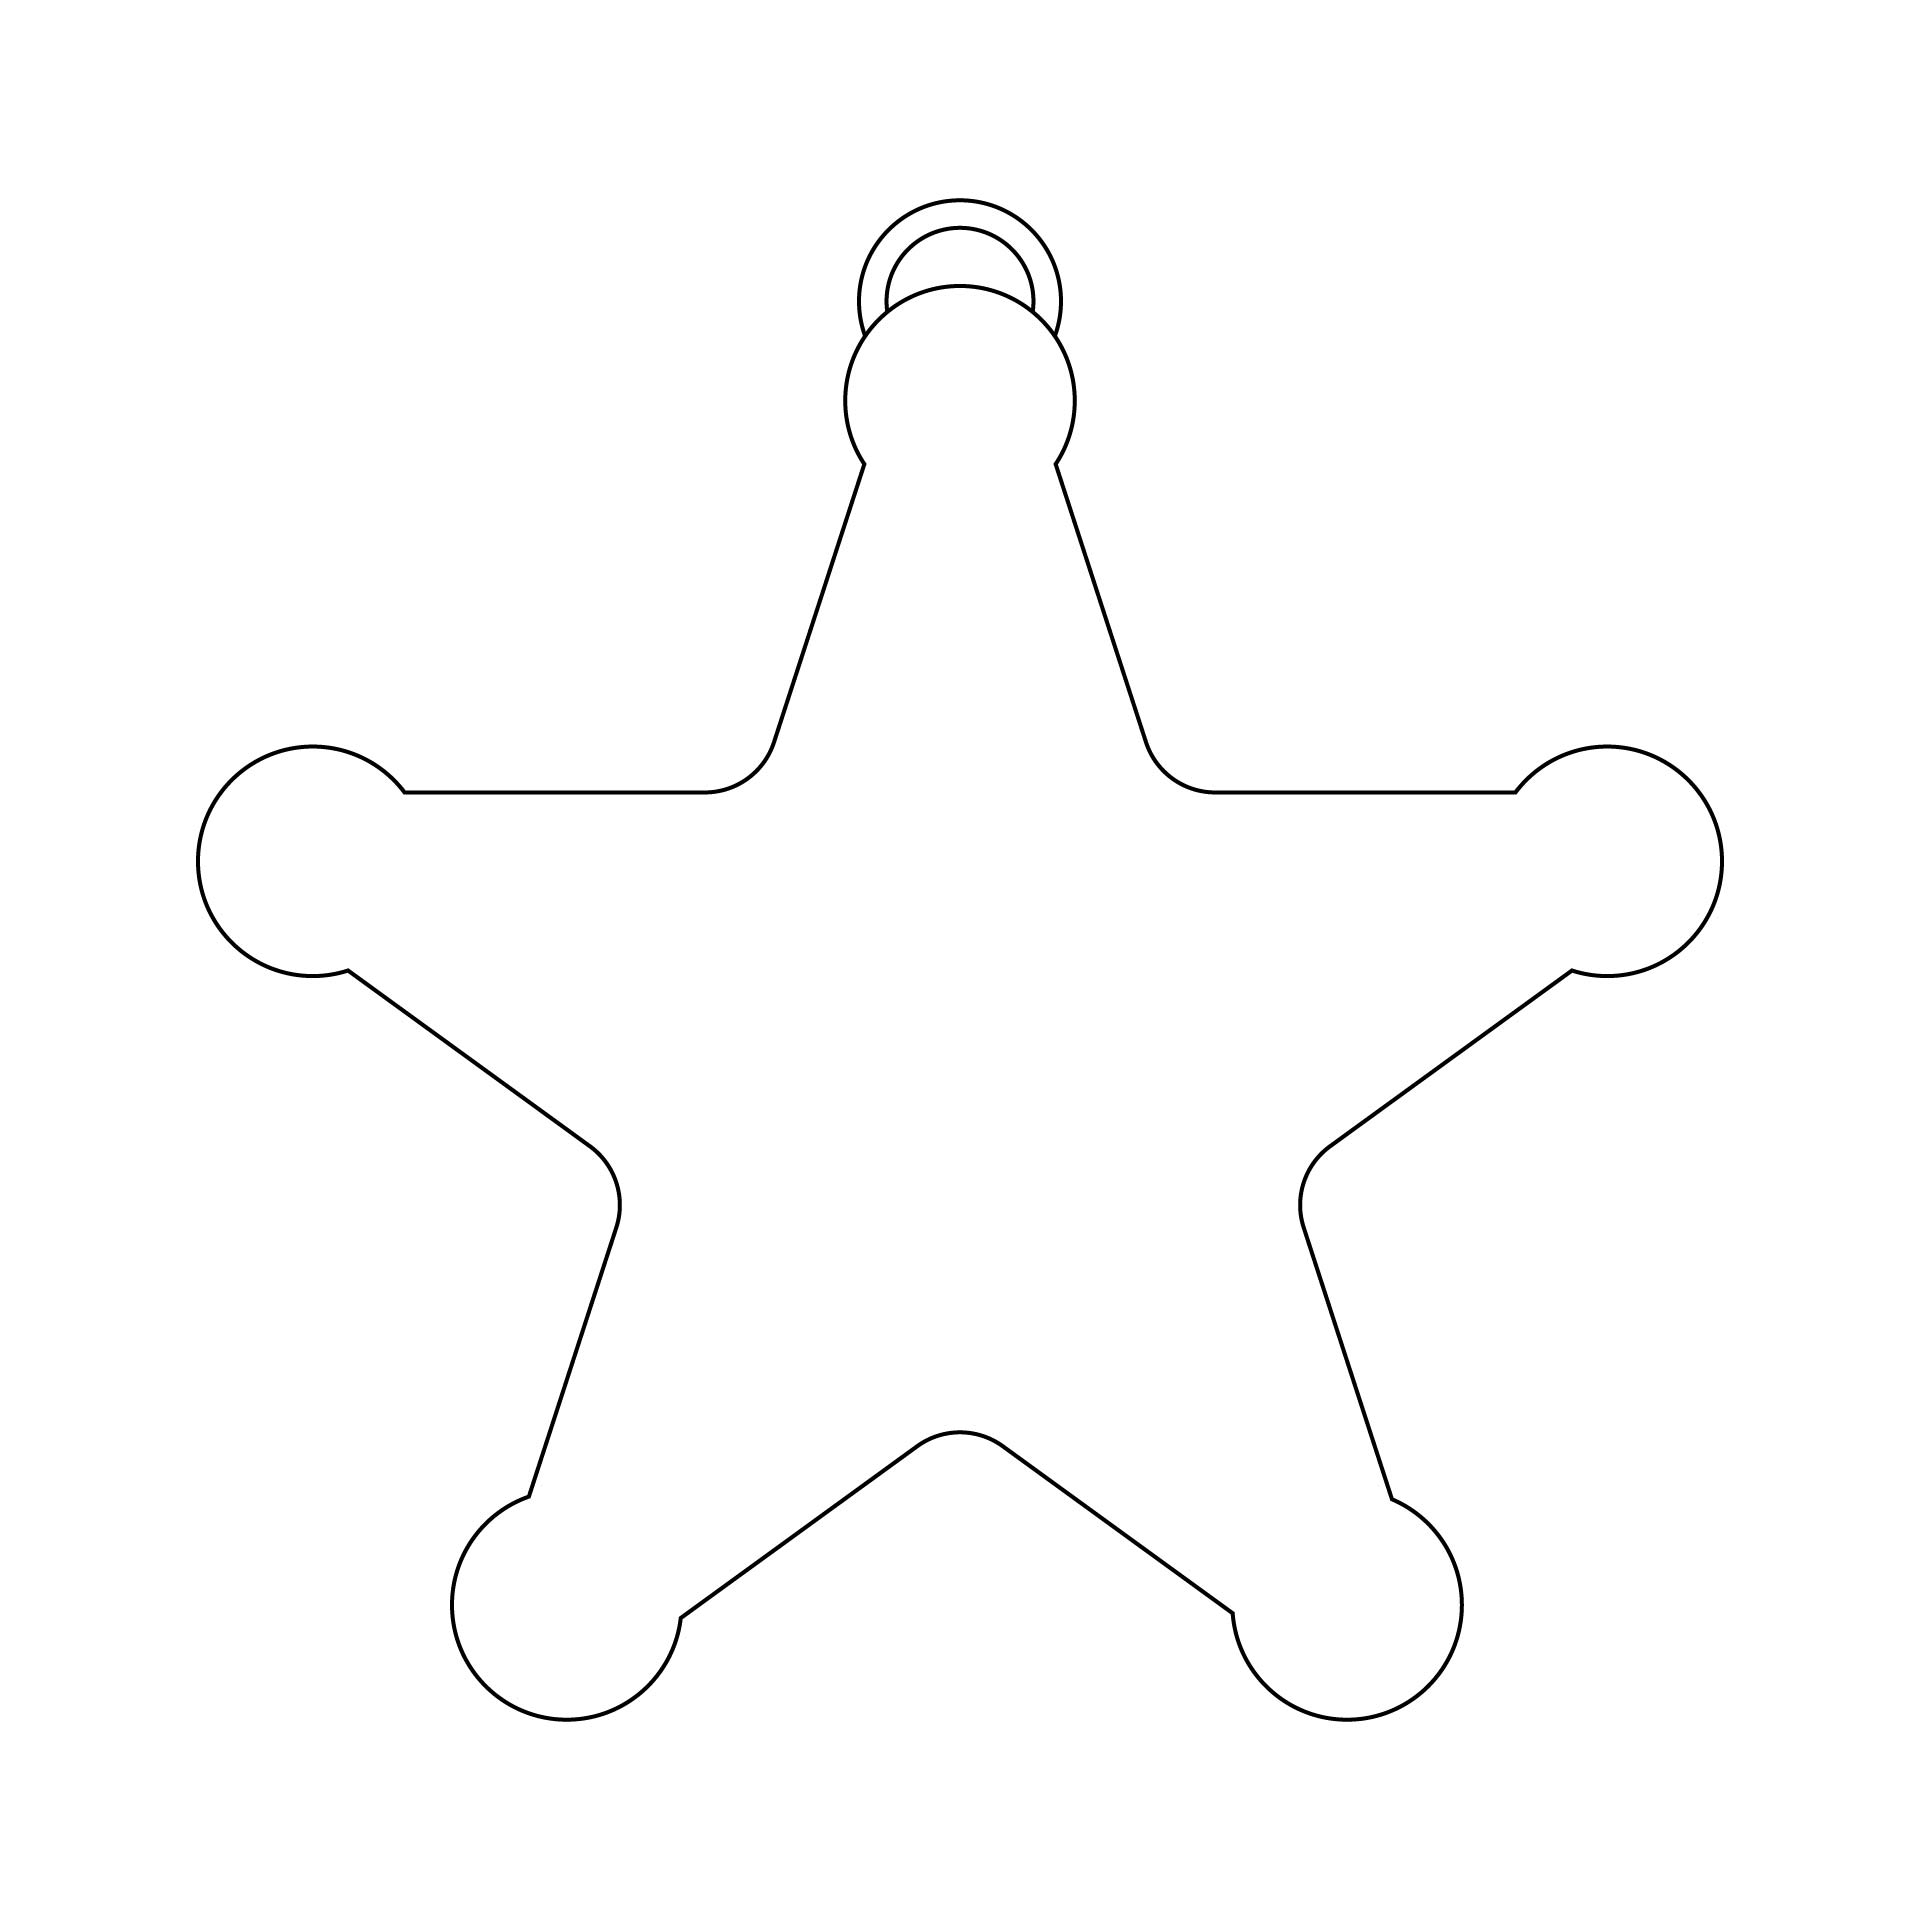 Printable Christmas Star Ornaments With Templates